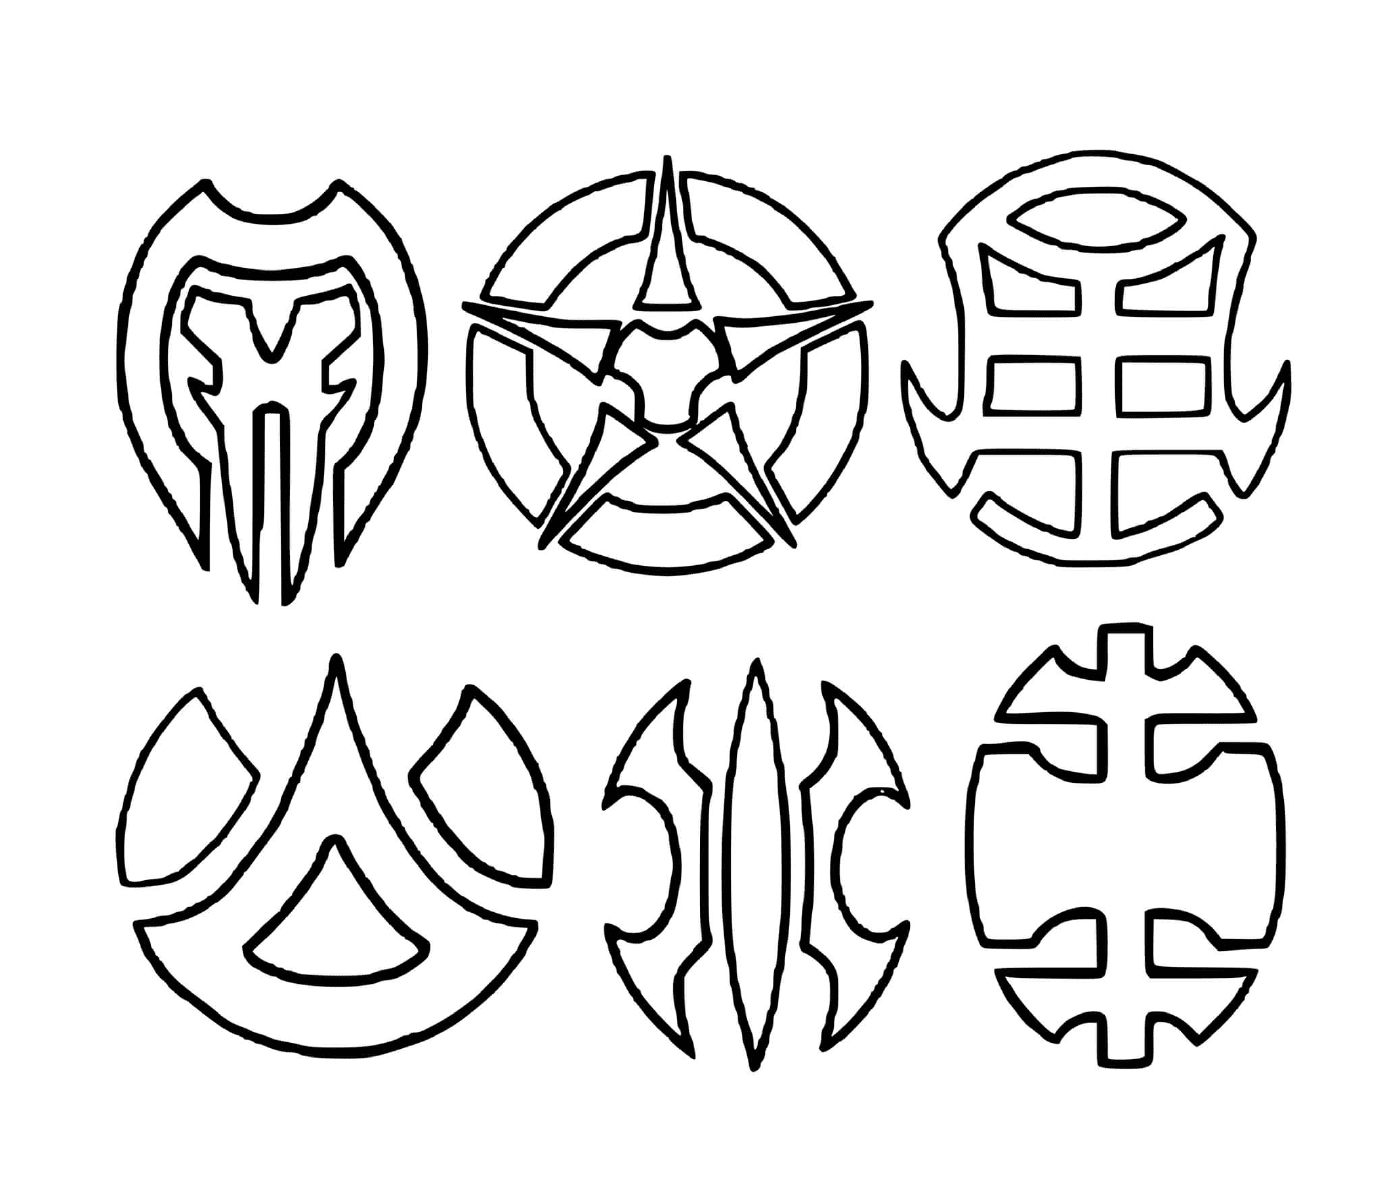  a set of six symbols drawn 